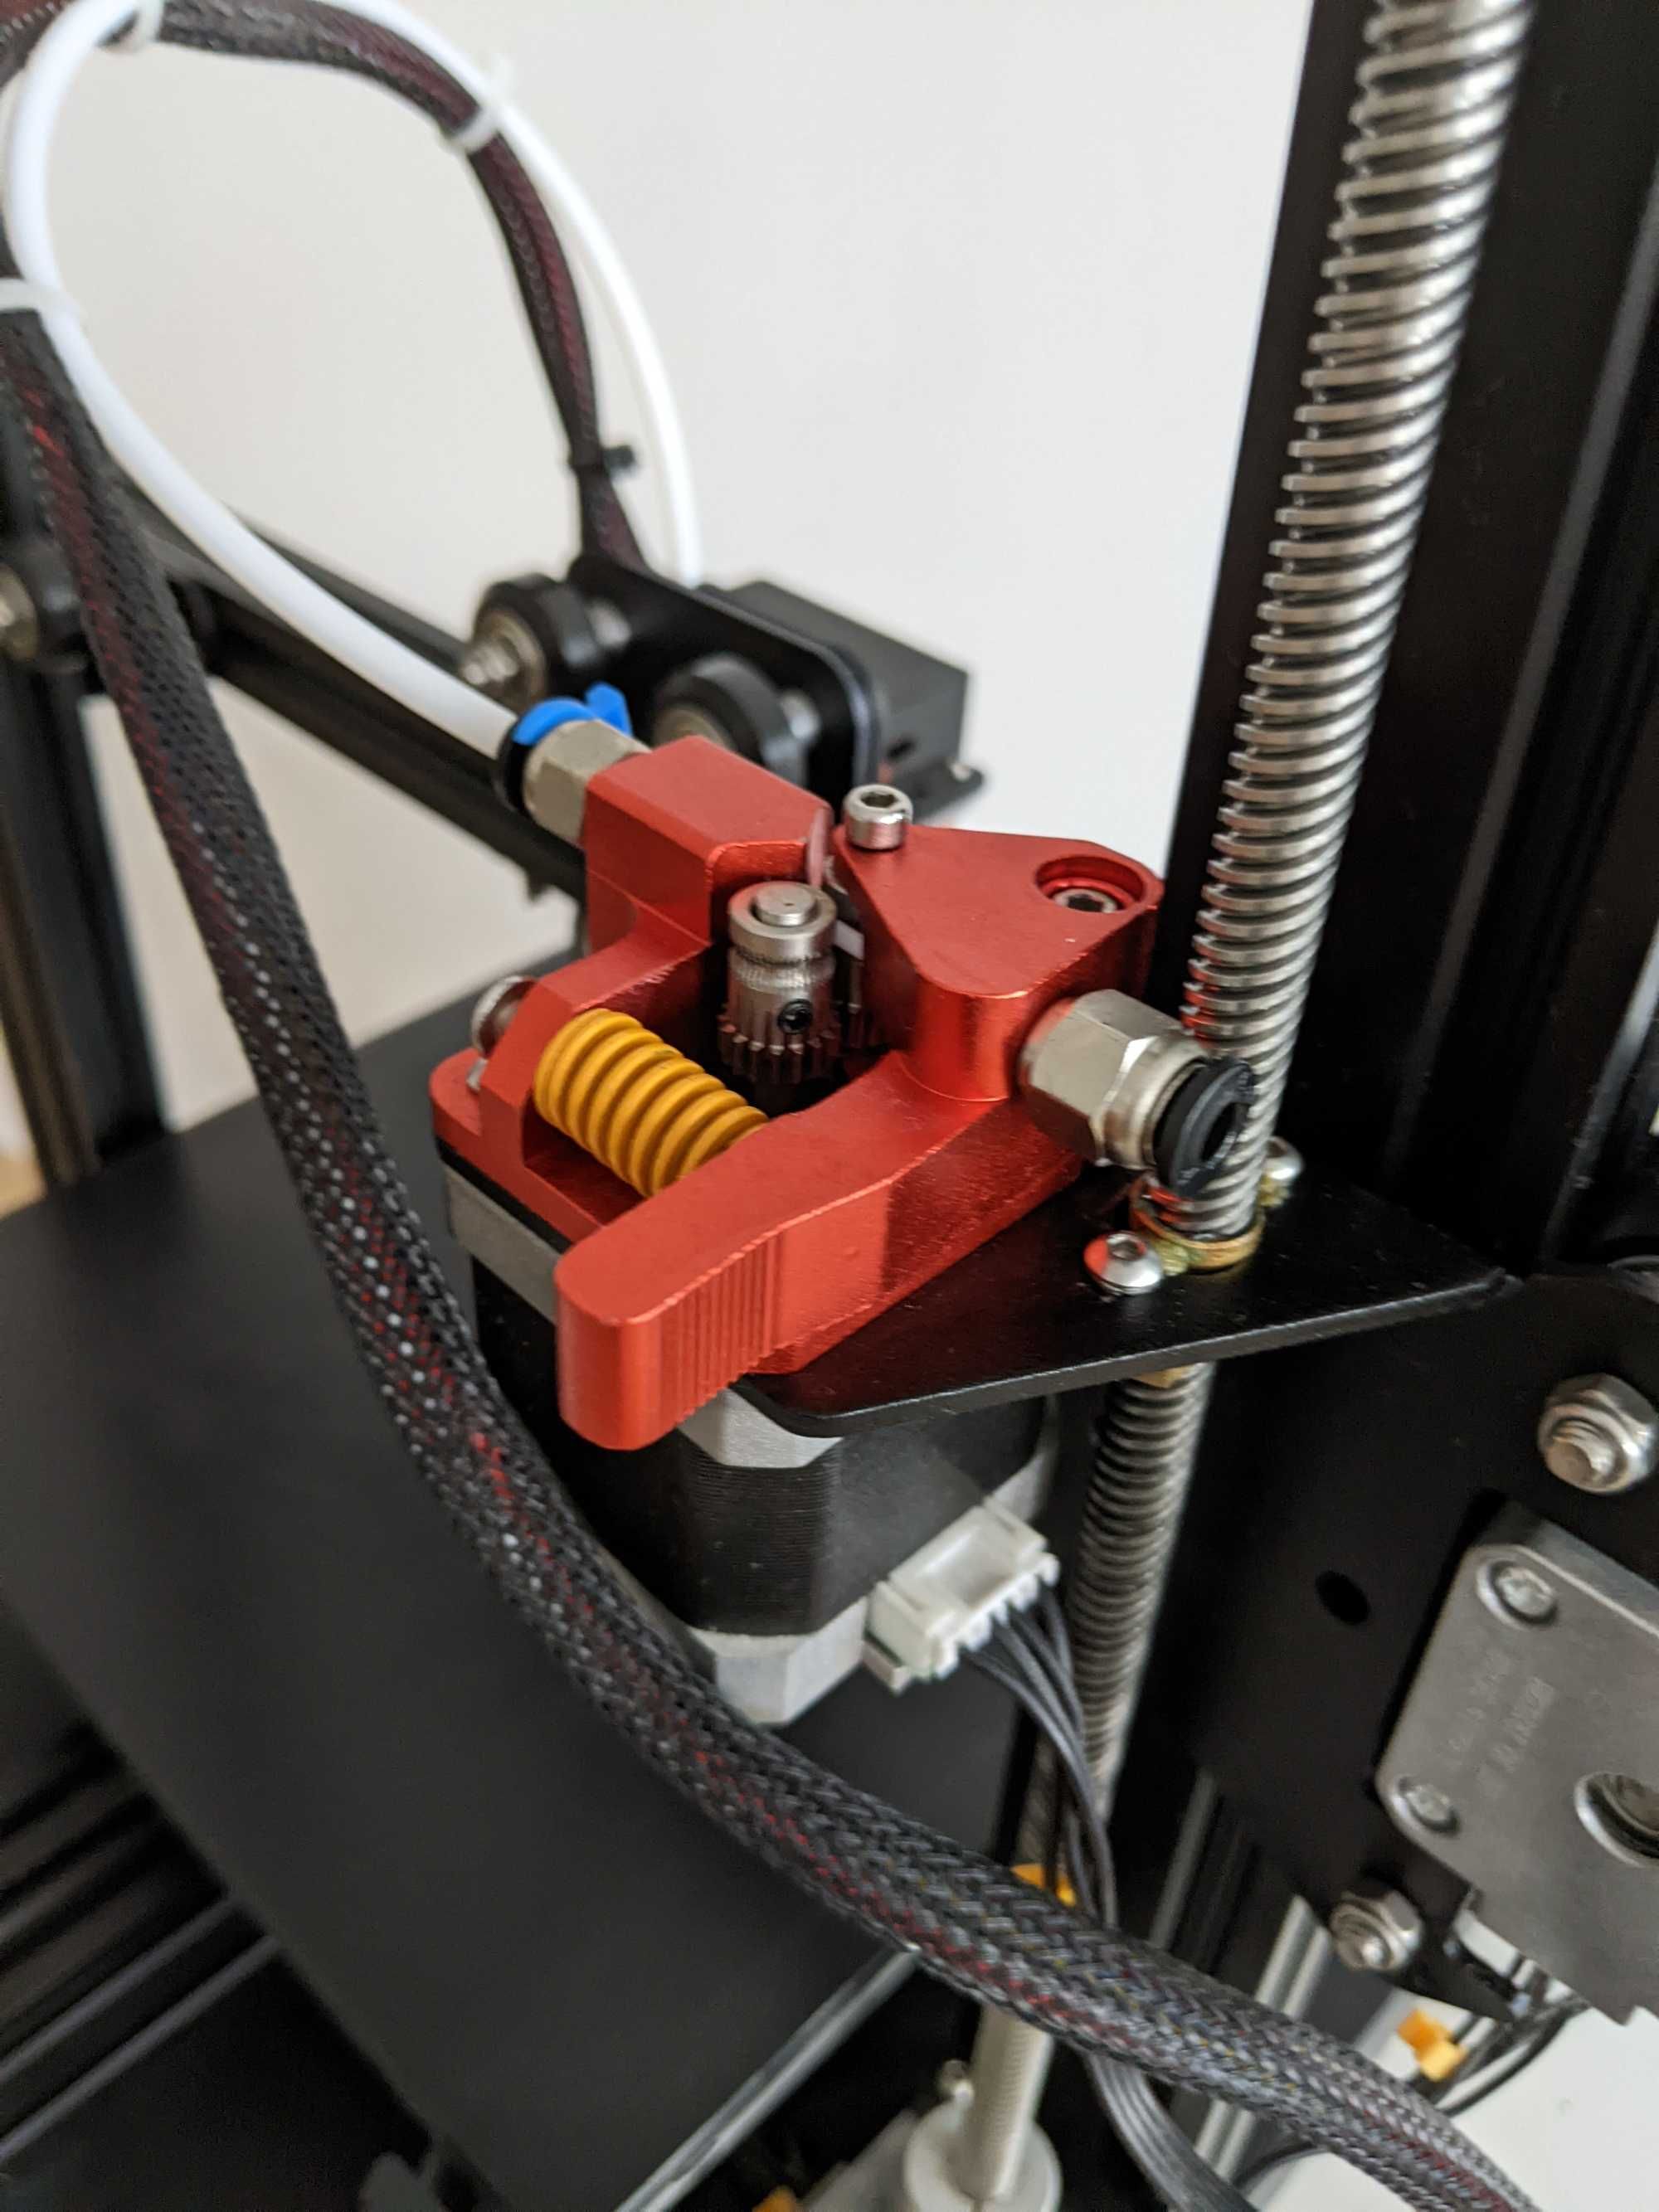 3D Printer Creality CR-20 Pro